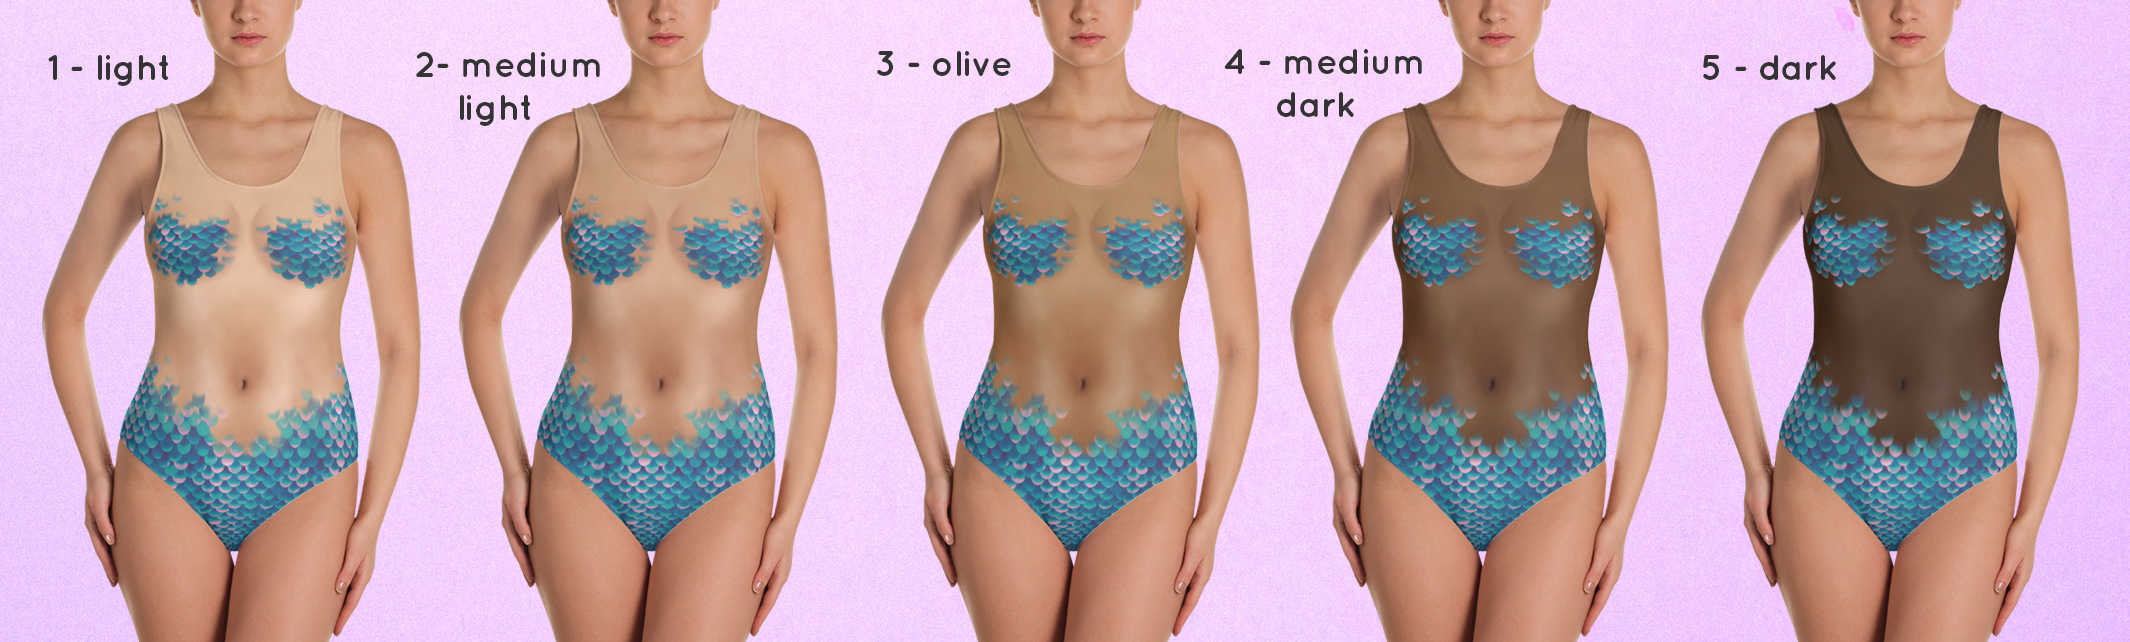 Teal Mermaid Scale Swimsuits